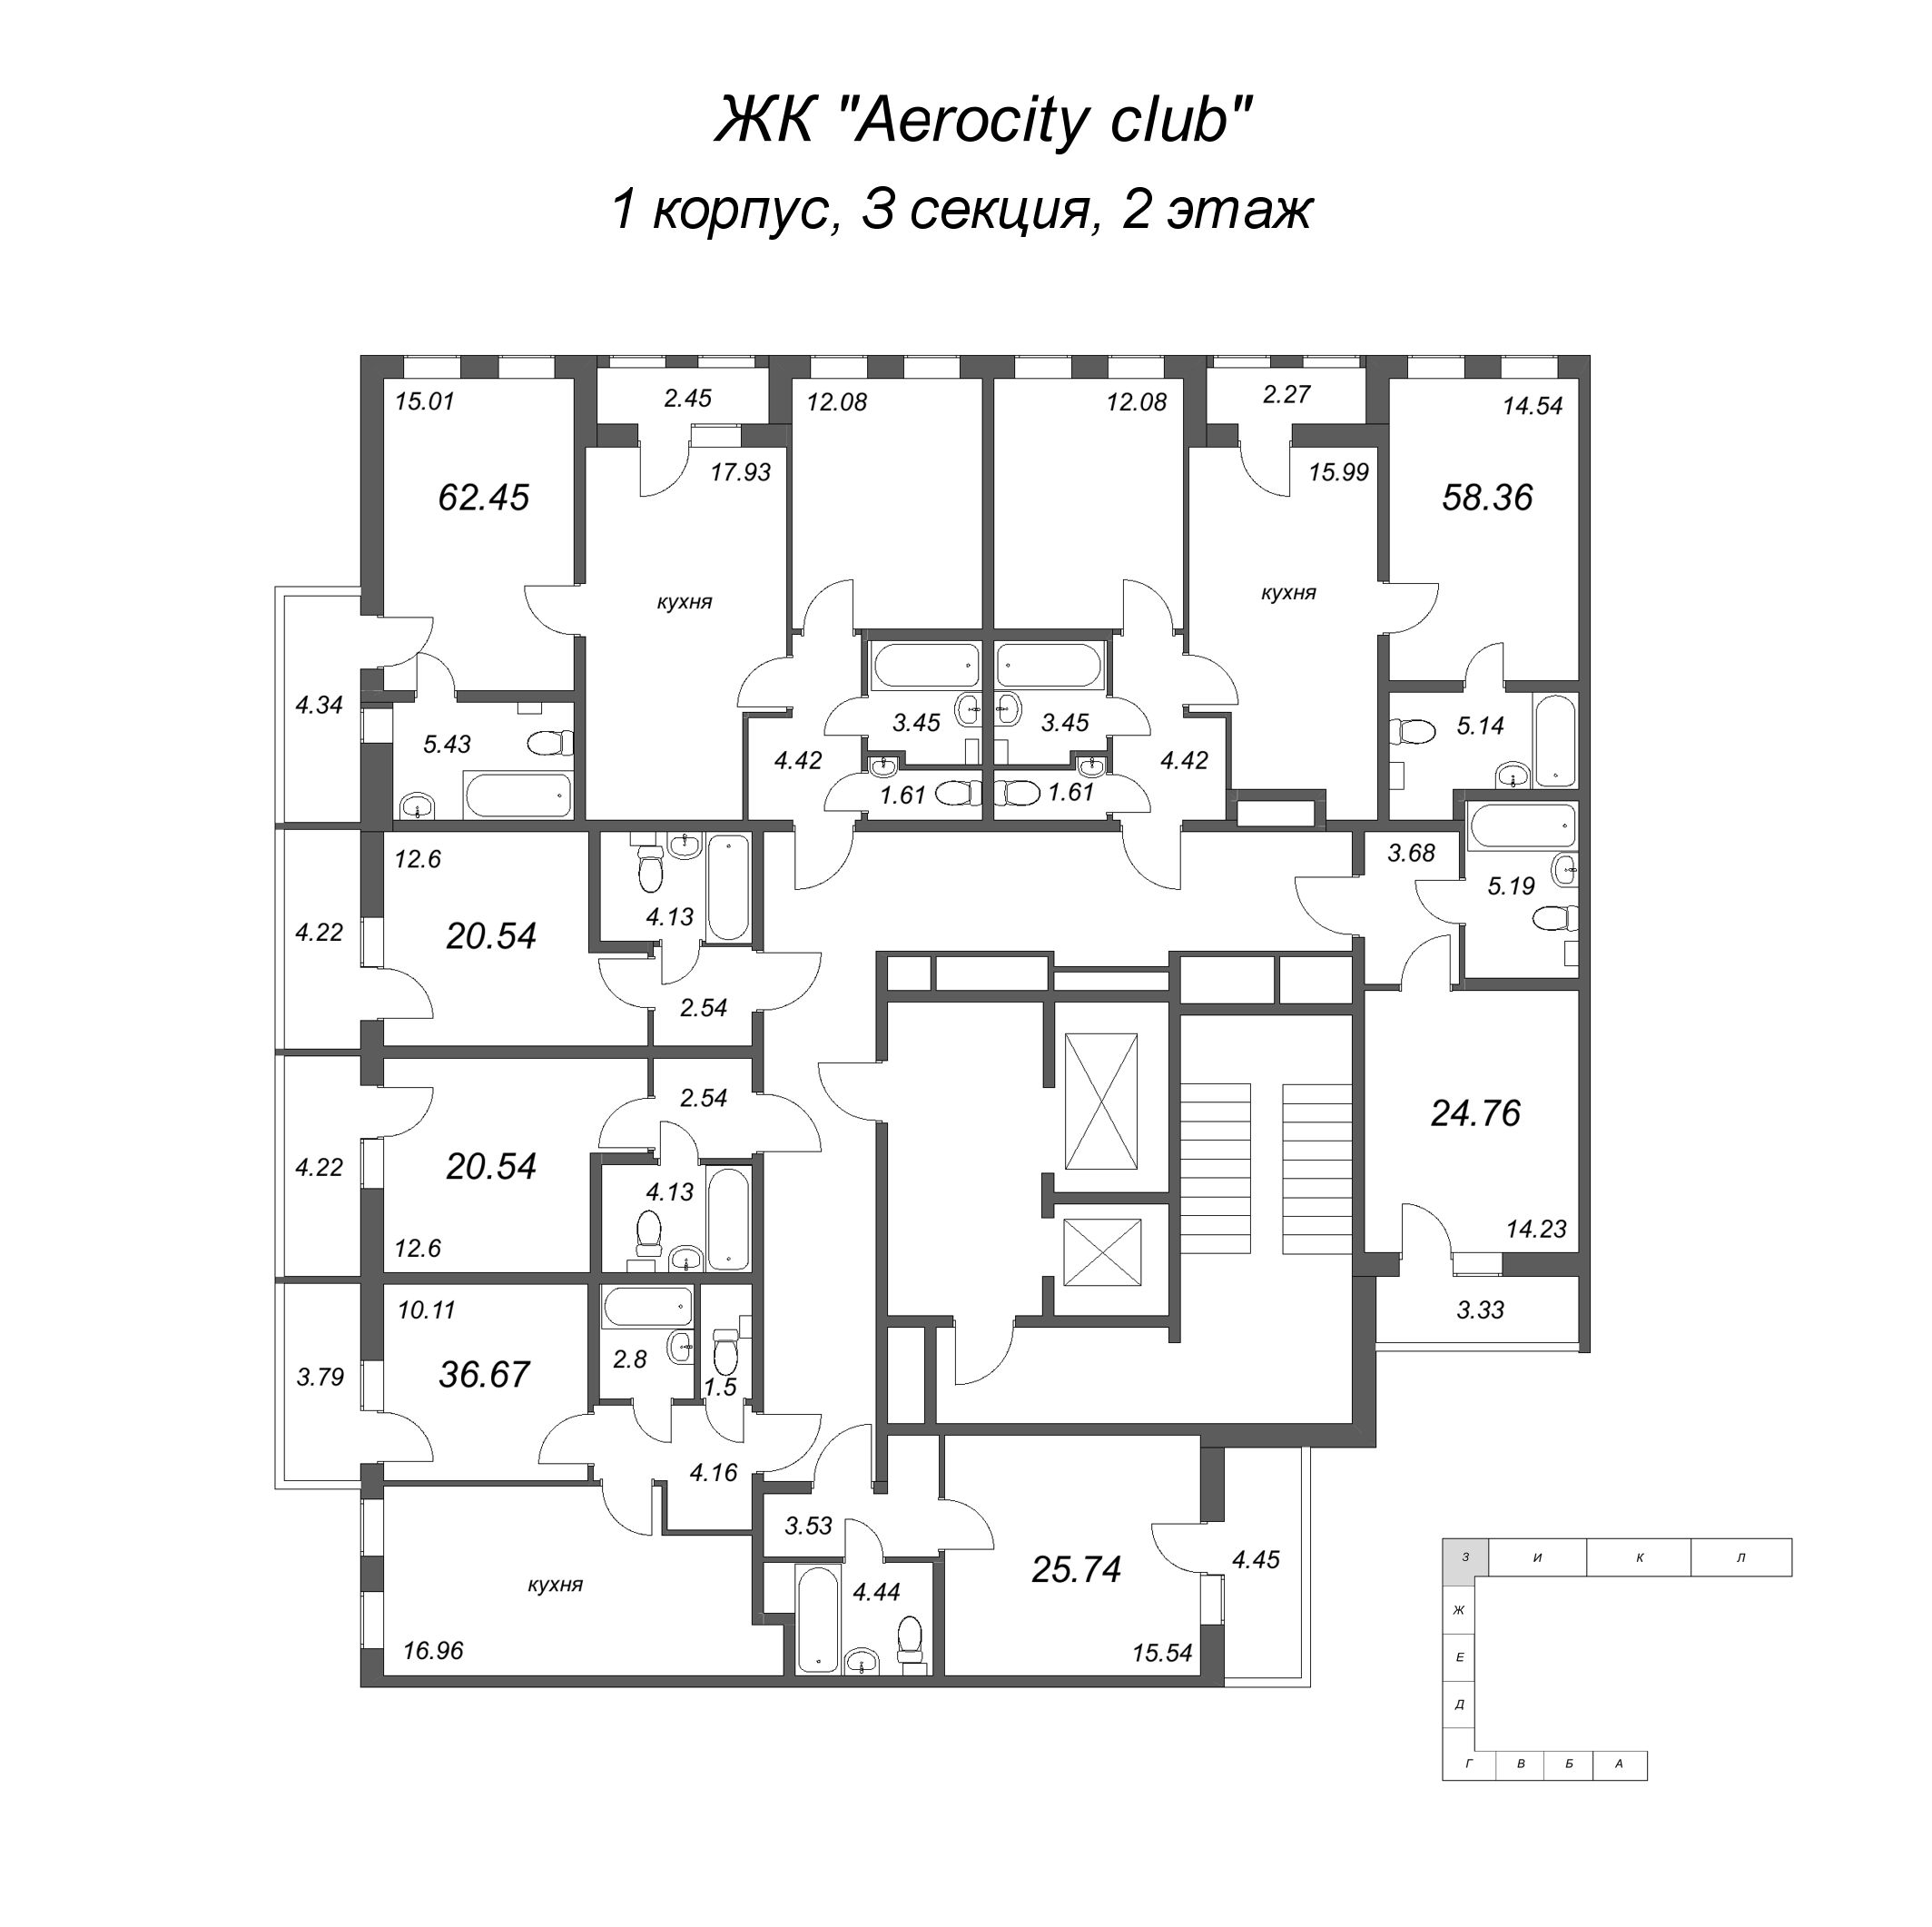 3-комнатная (Евро) квартира, 58.36 м² - планировка этажа